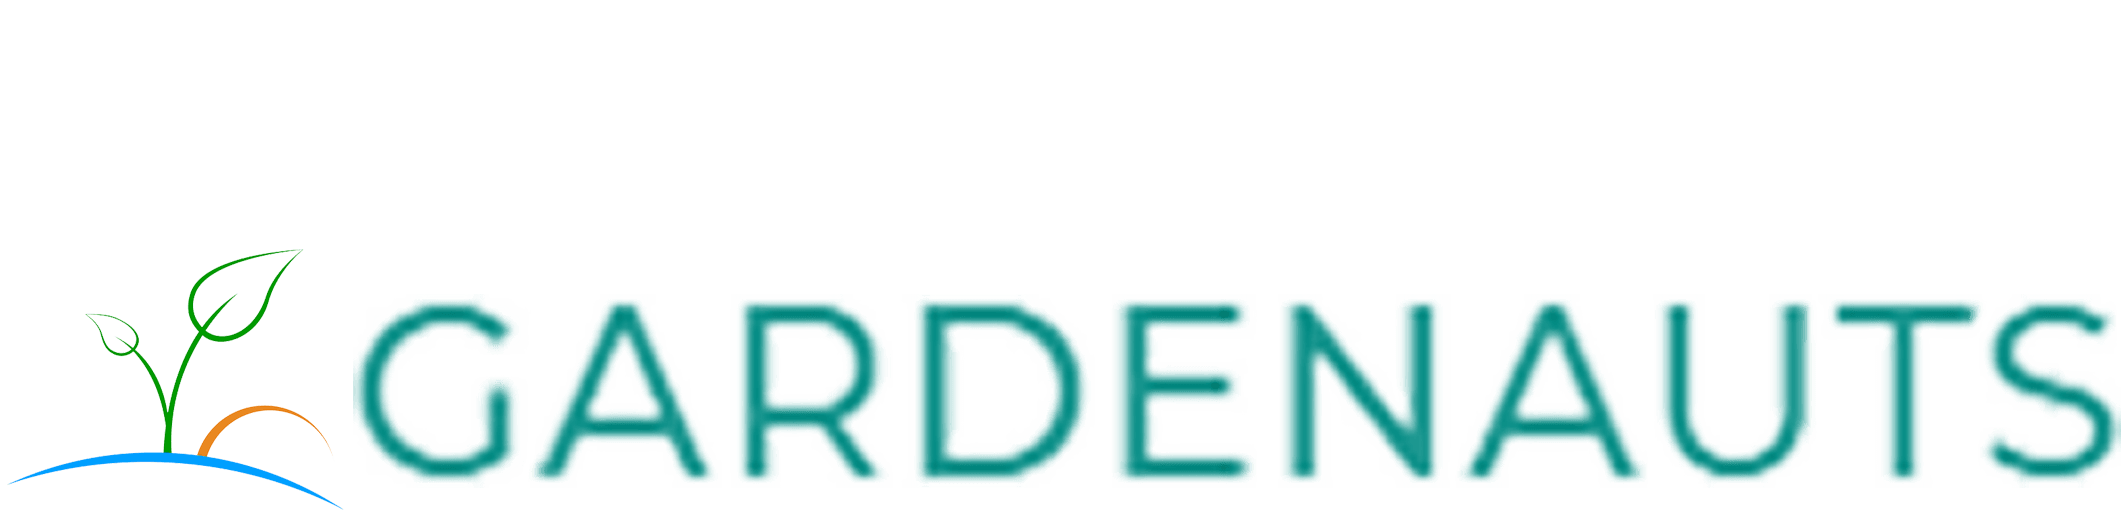 Gardenauts-Logo-s-napisem